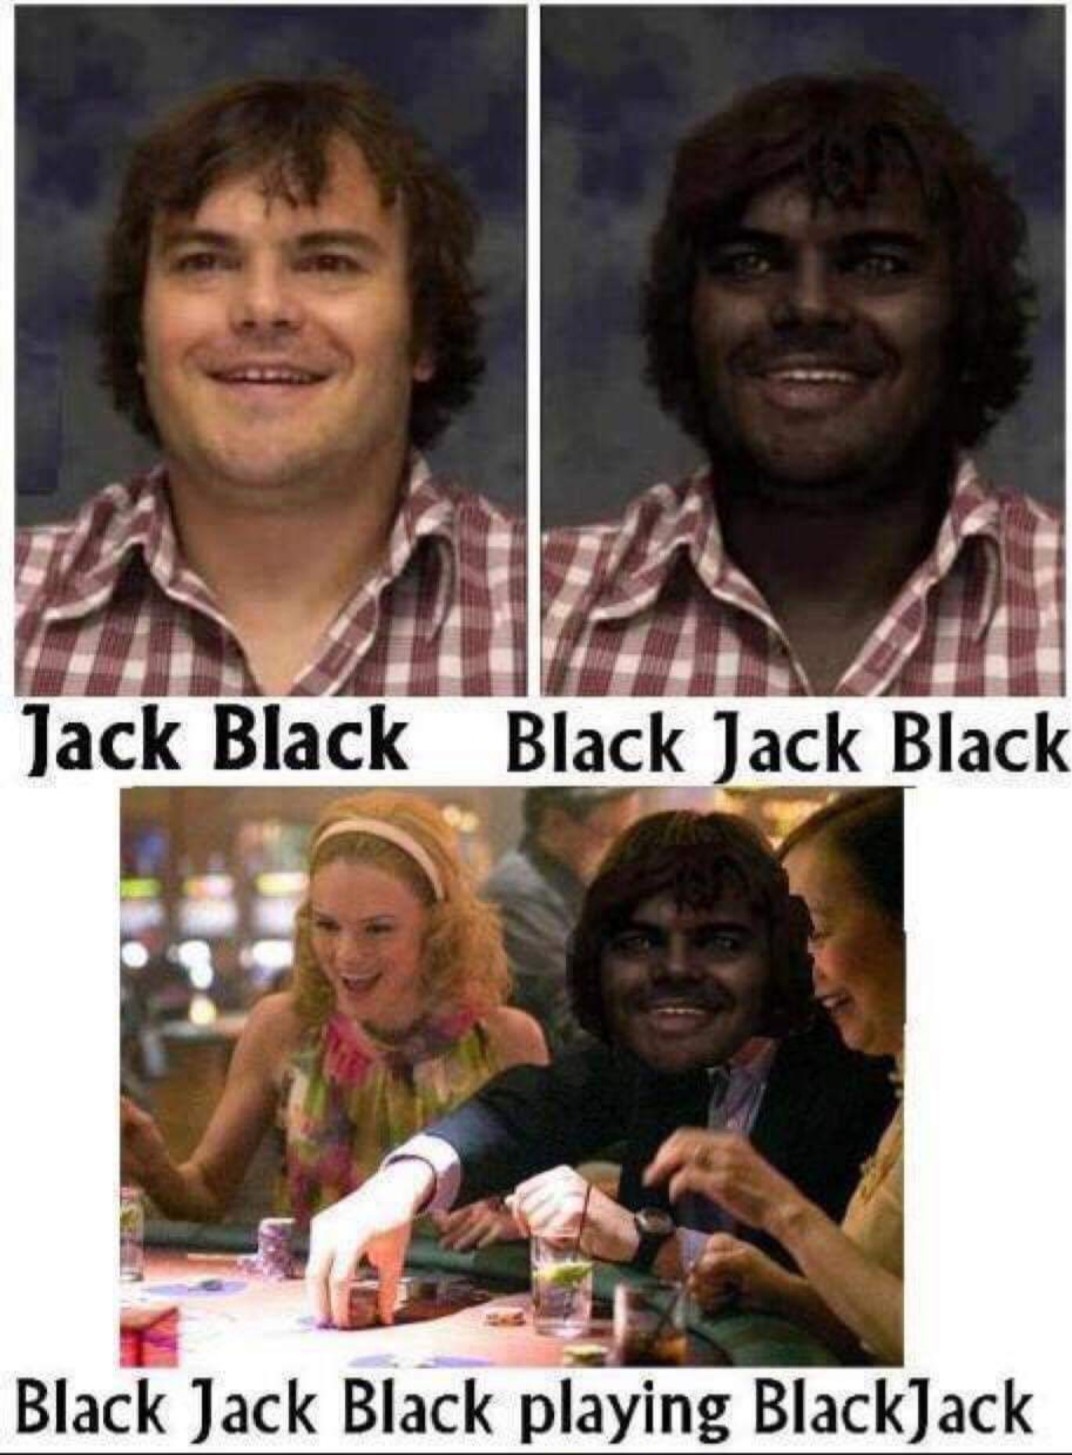 Black jack black playing jack black - meme